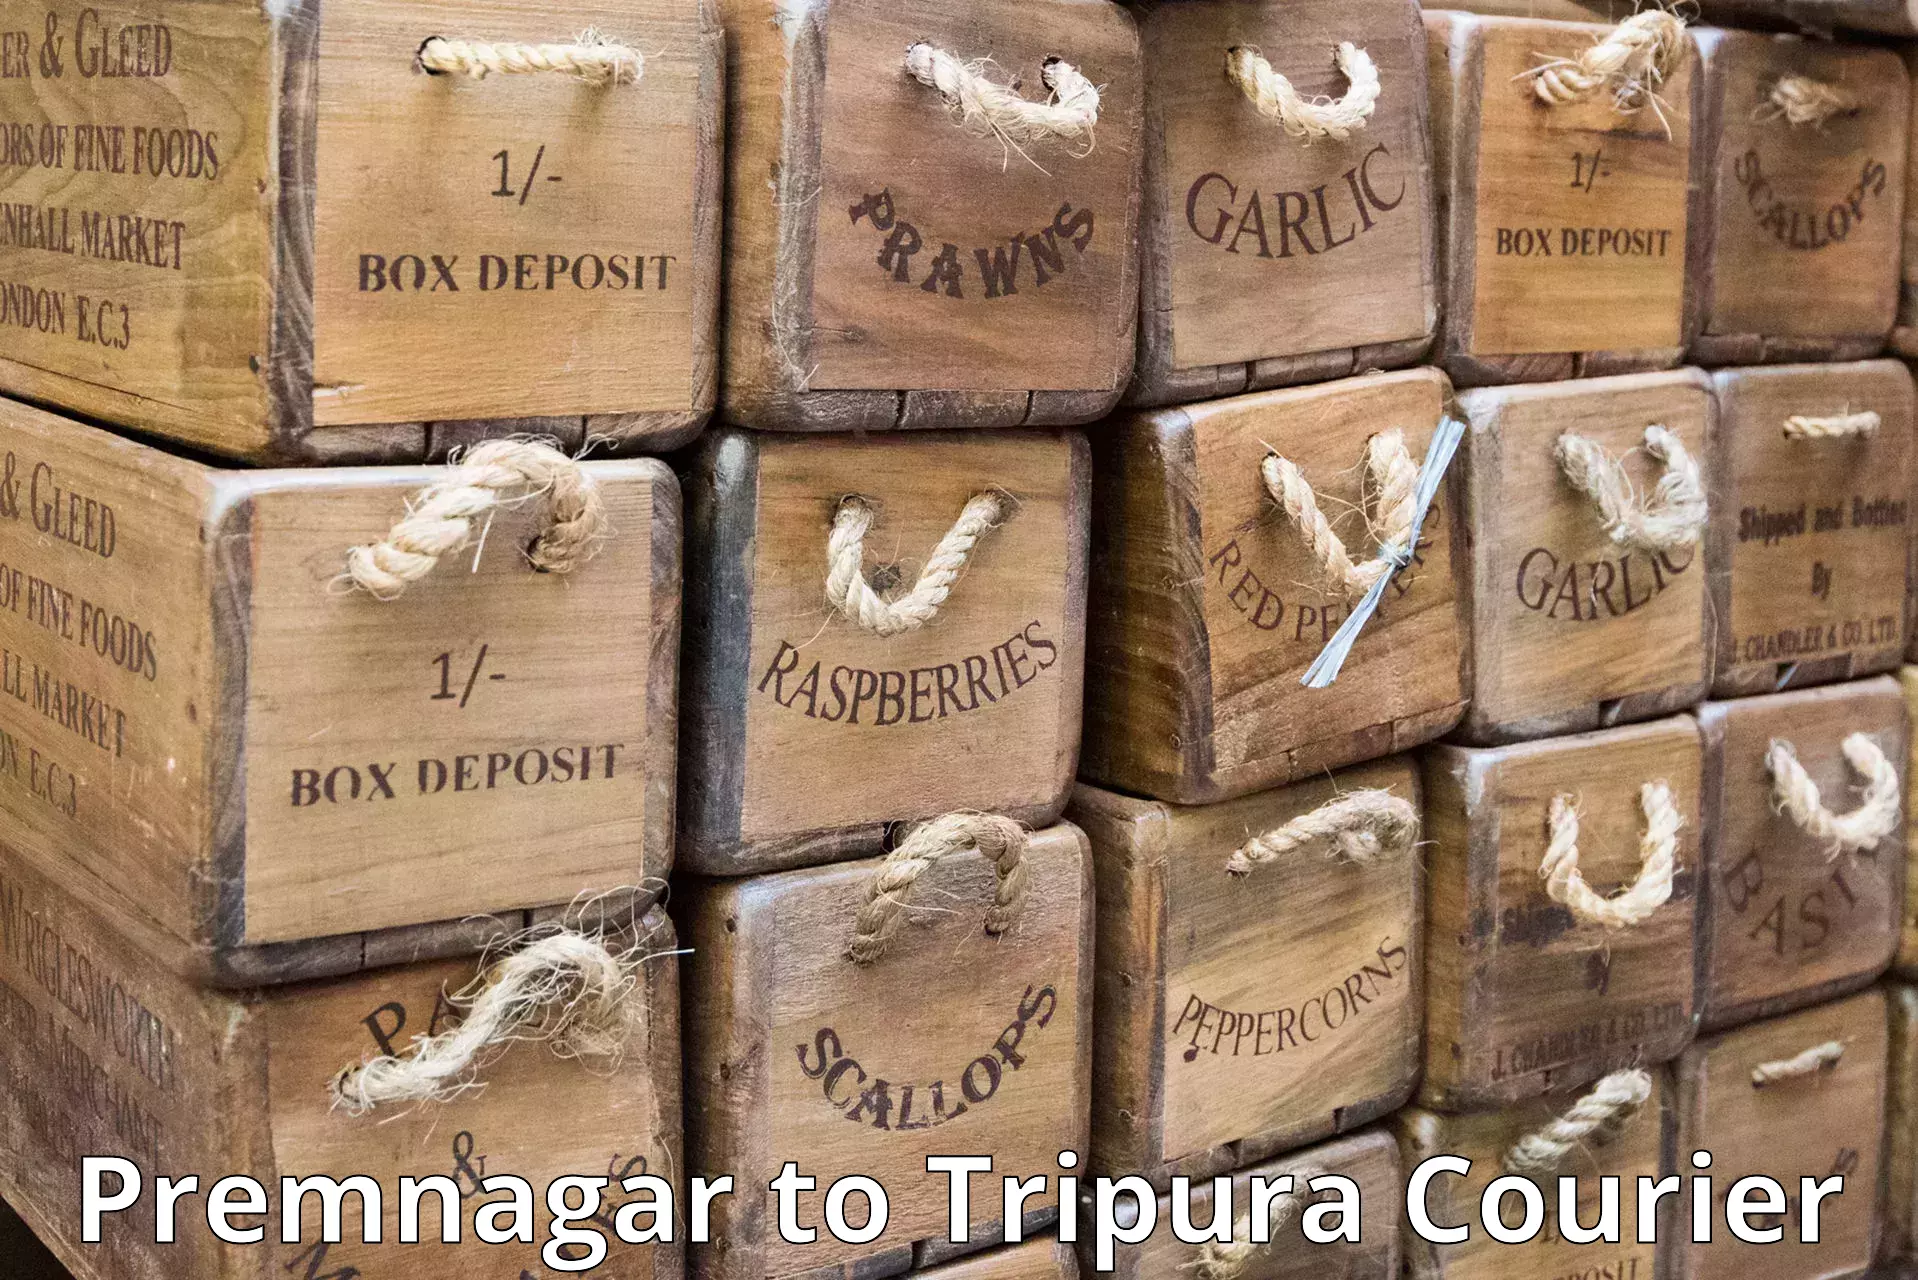 Courier service comparison Premnagar to Udaipur Tripura